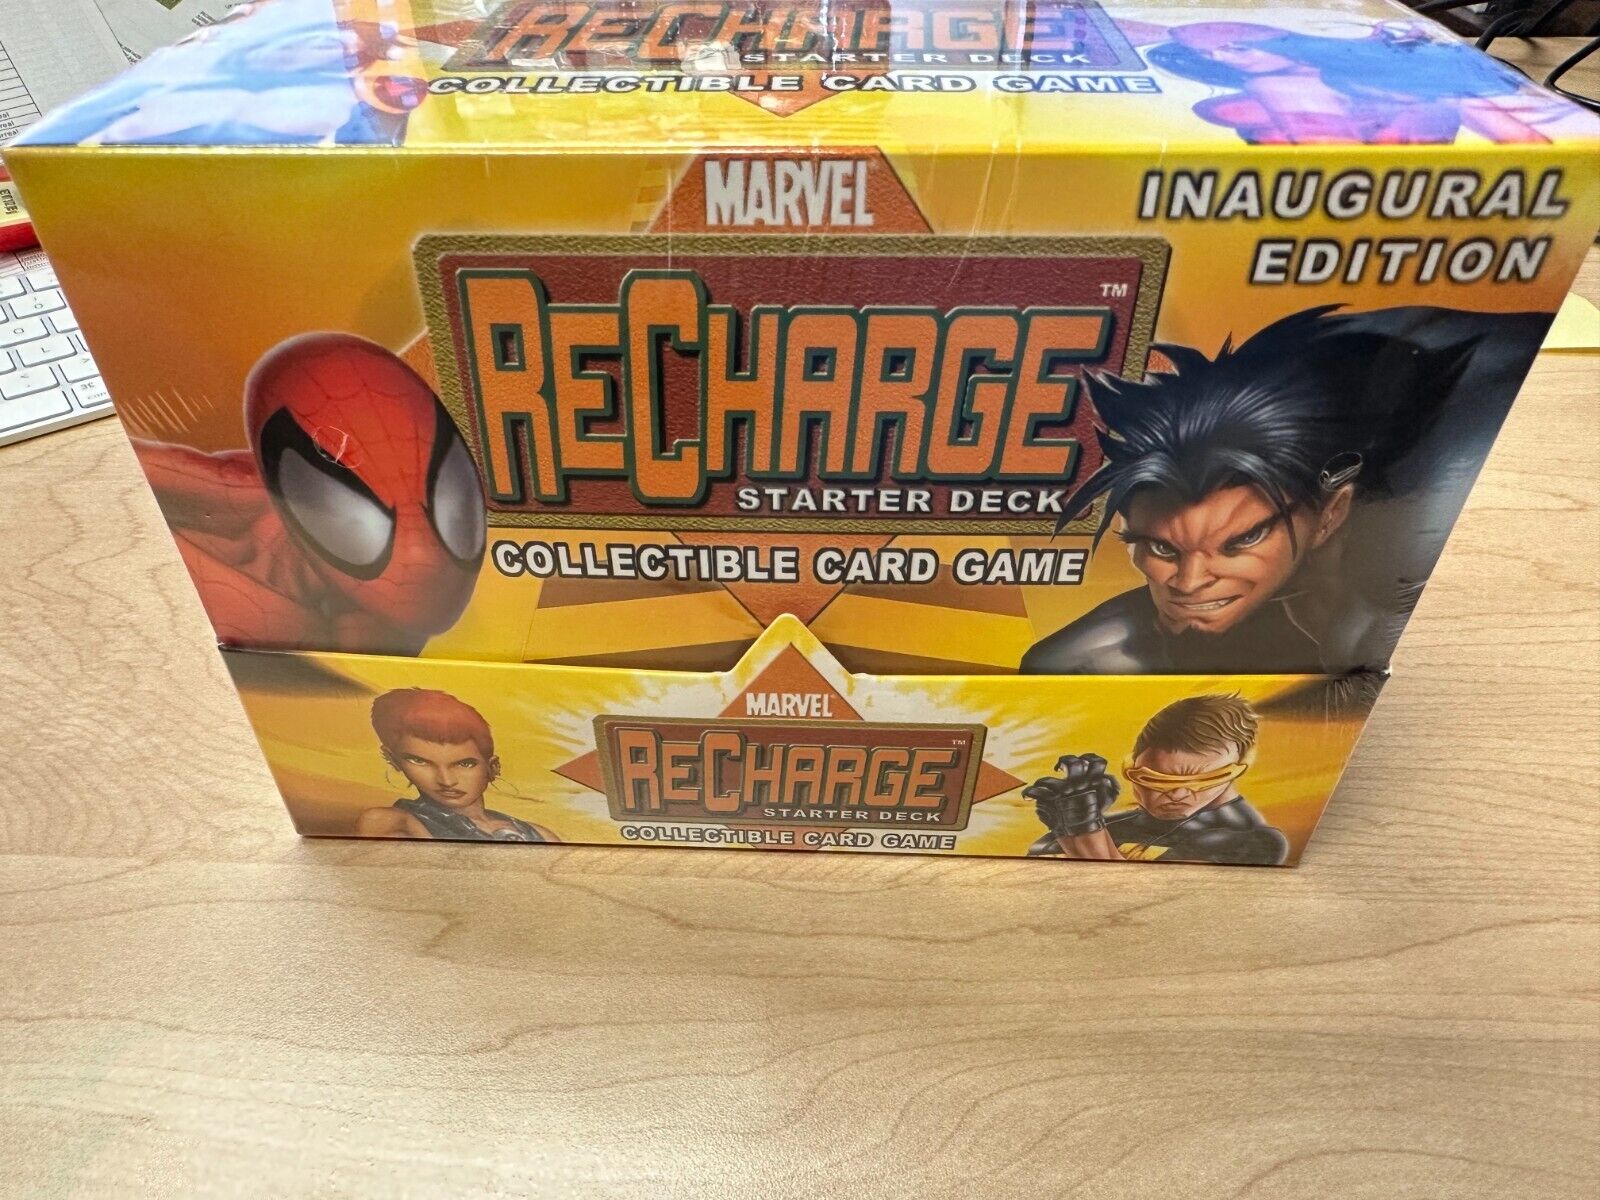 Marvel ReCharge Starter Deck sealed Box 8 Decks FASC 